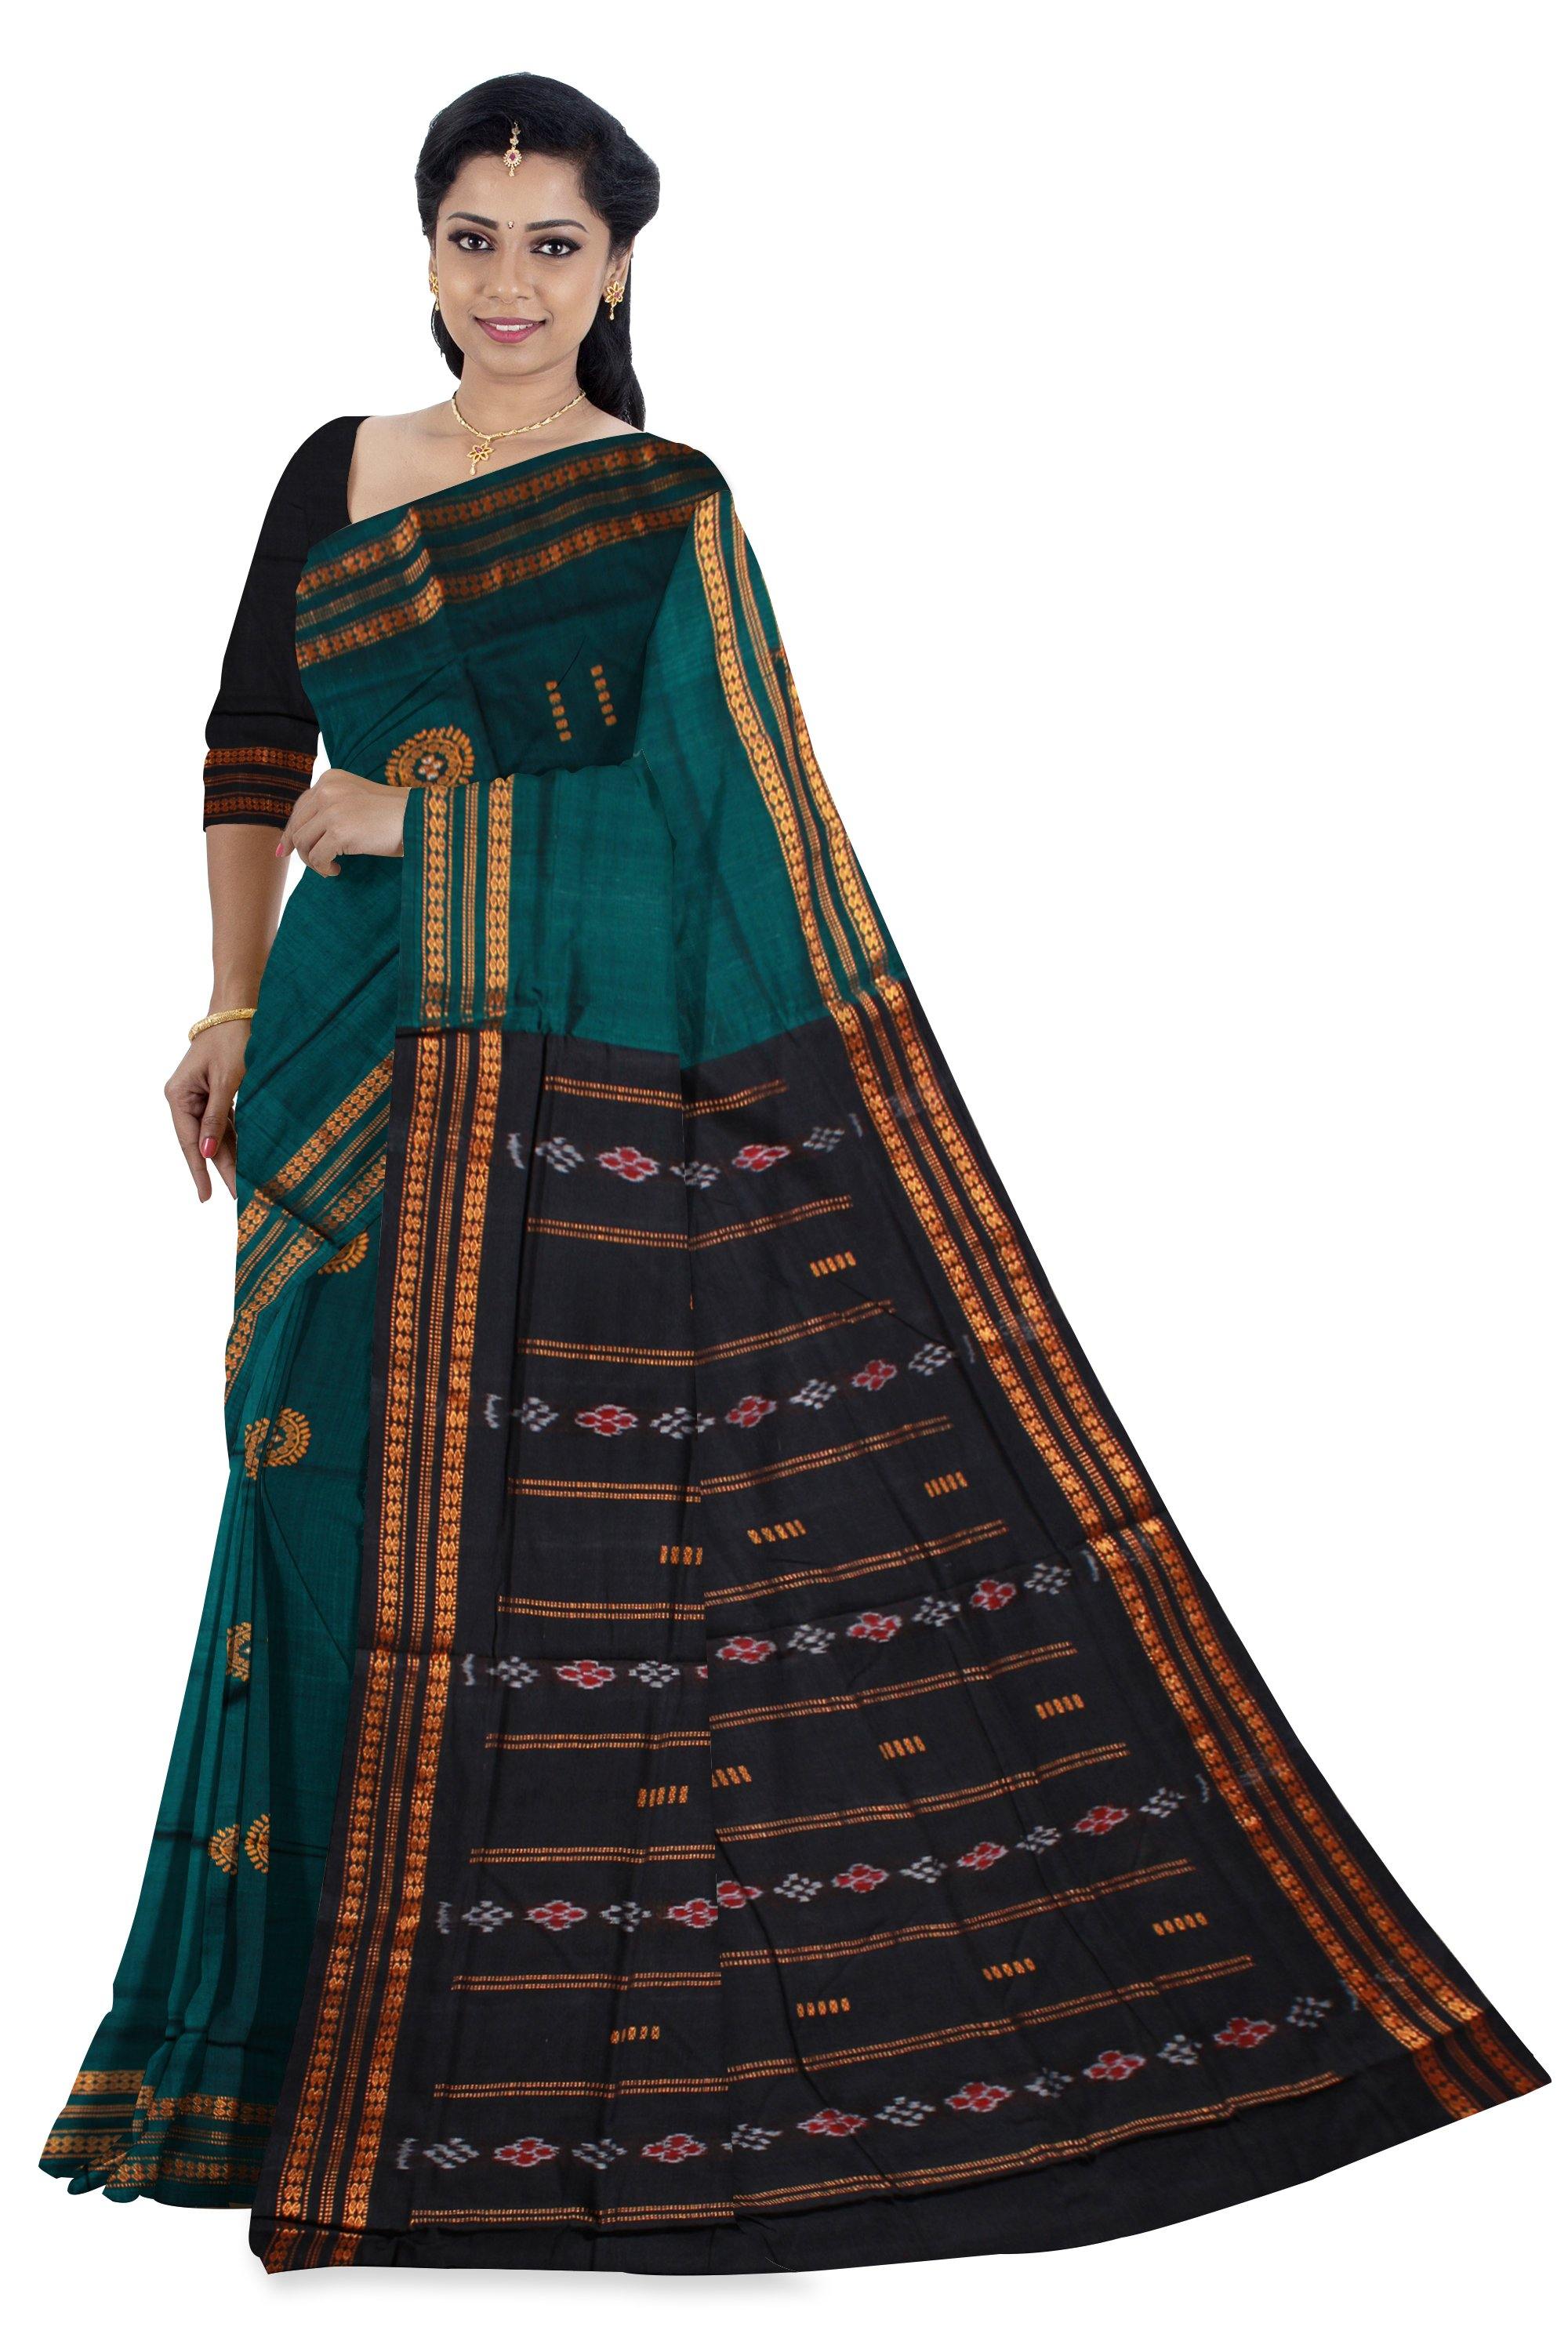 Sambalpuri Bomkei pattern flower print saree in Dark GREEN color without blouse piece - Koshali Arts & Crafts Enterprise